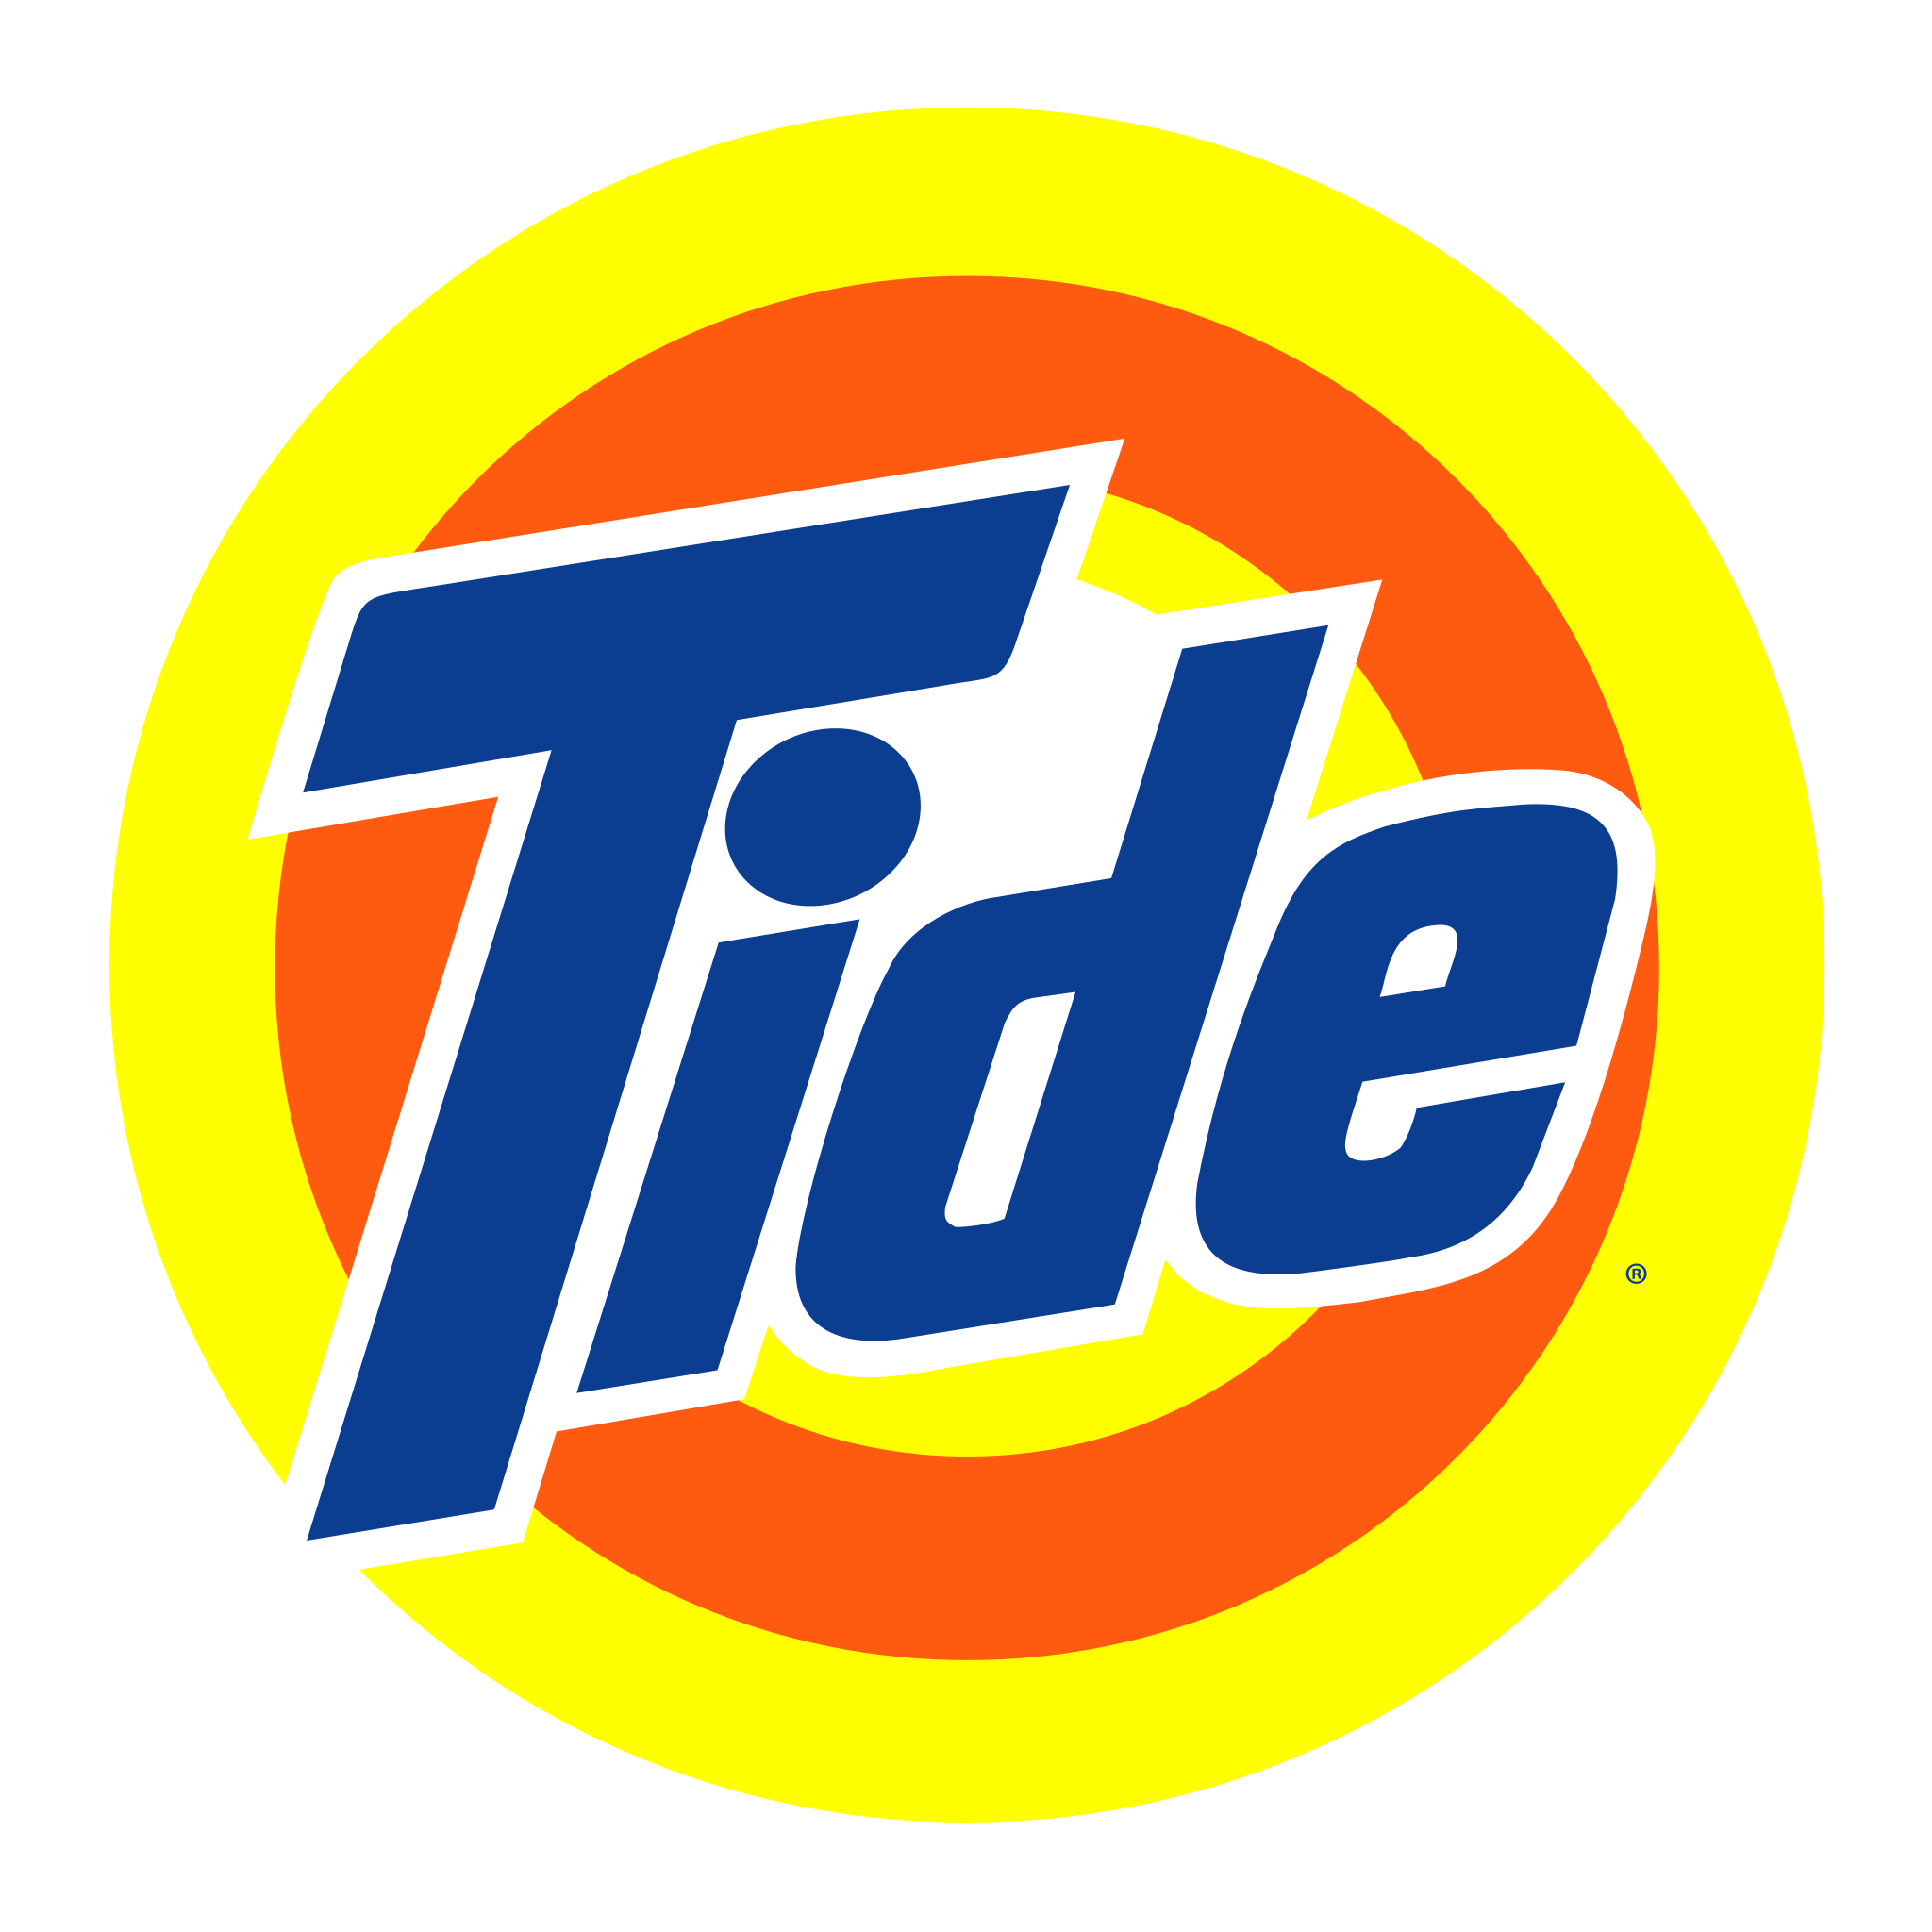 File:Tide logo.svg - Wikimedia Commons